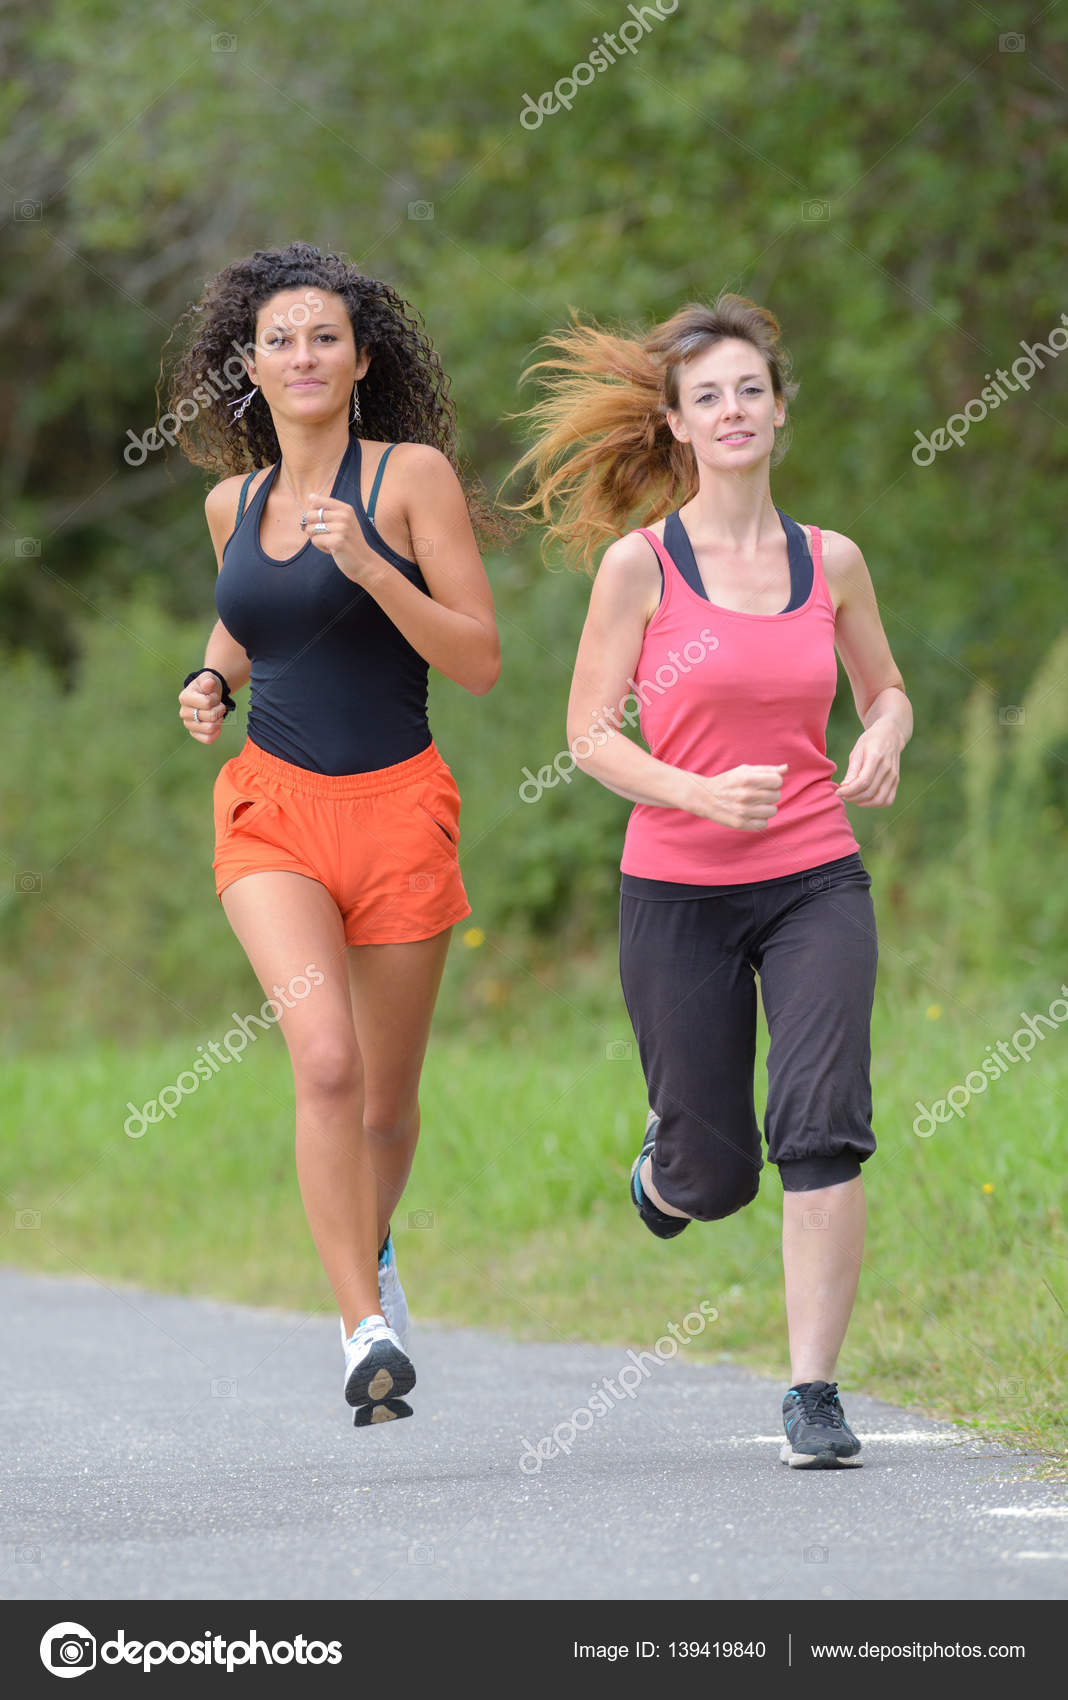 https://st3.depositphotos.com/1192060/13941/i/1600/depositphotos_139419840-stock-photo-women-running-in-park.jpg